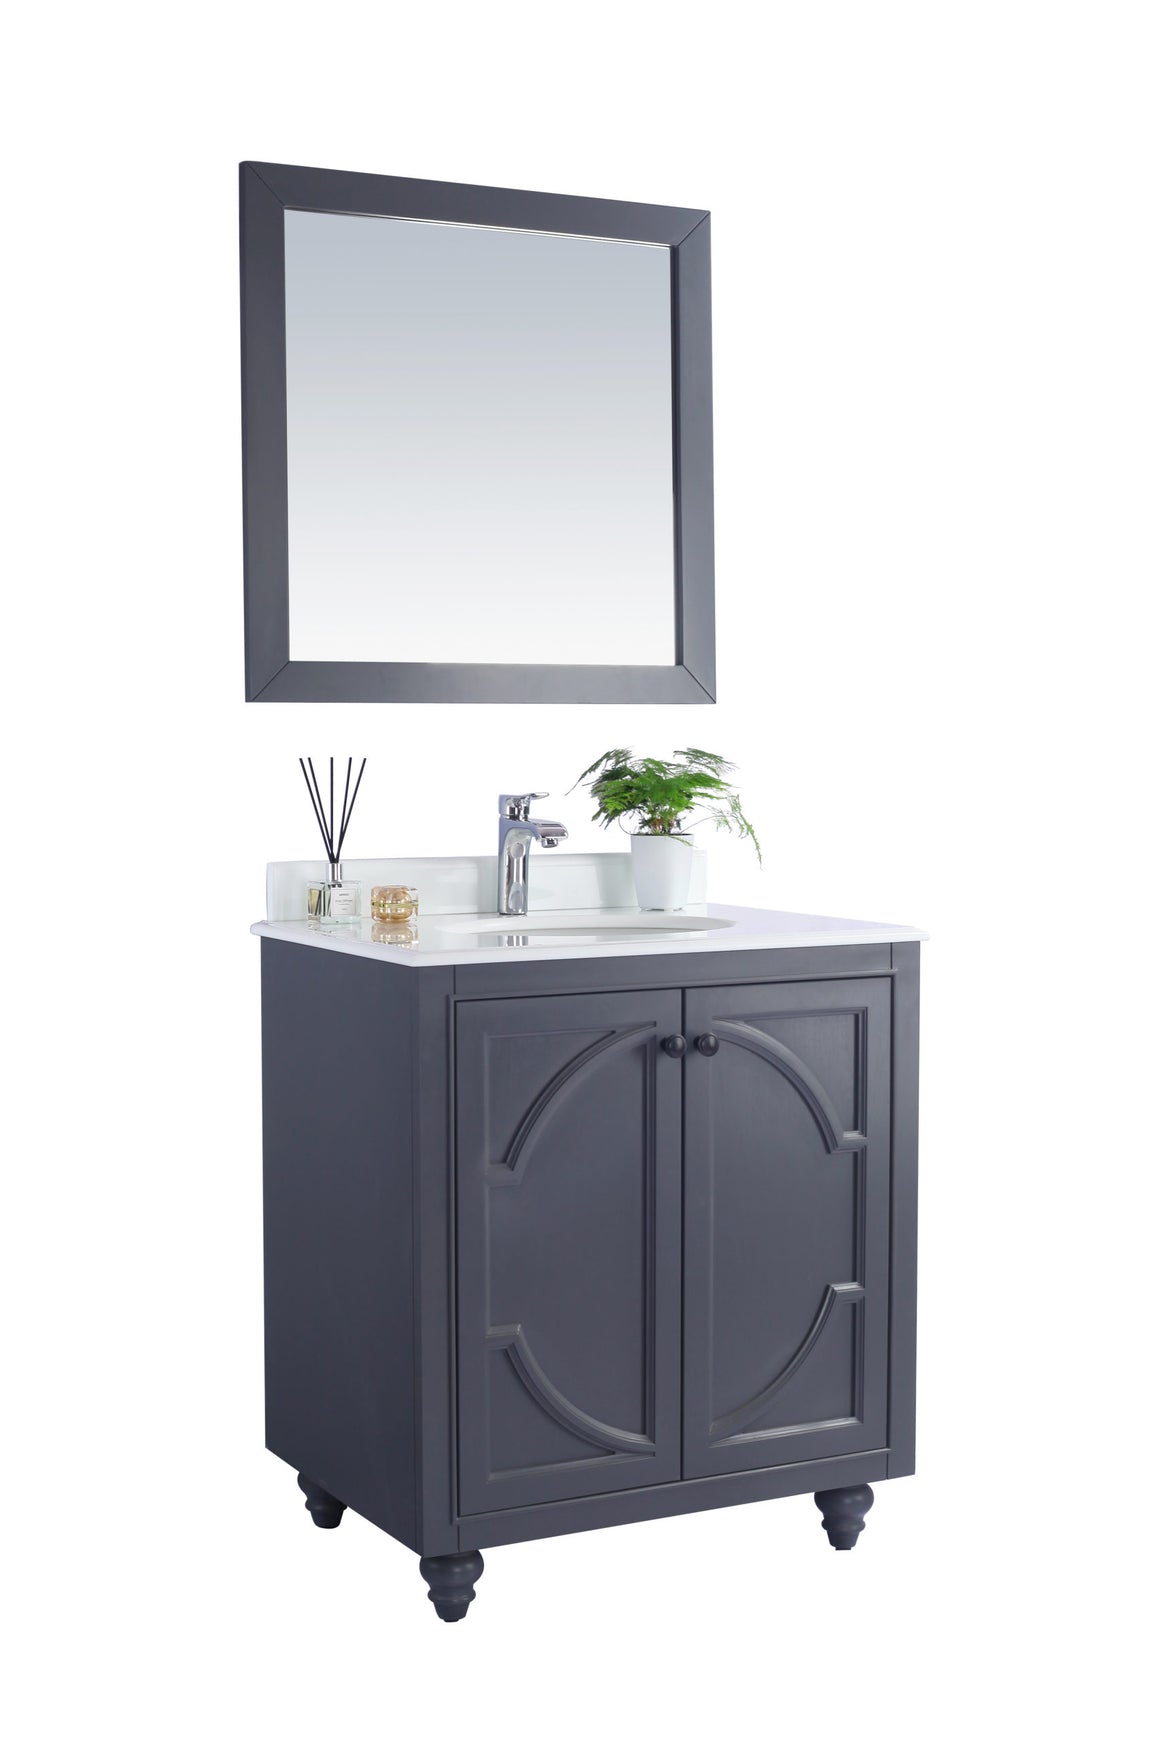 Odyssey - 30 - Maple Grey Cabinet + Pure White Phoenix Stone Countertop